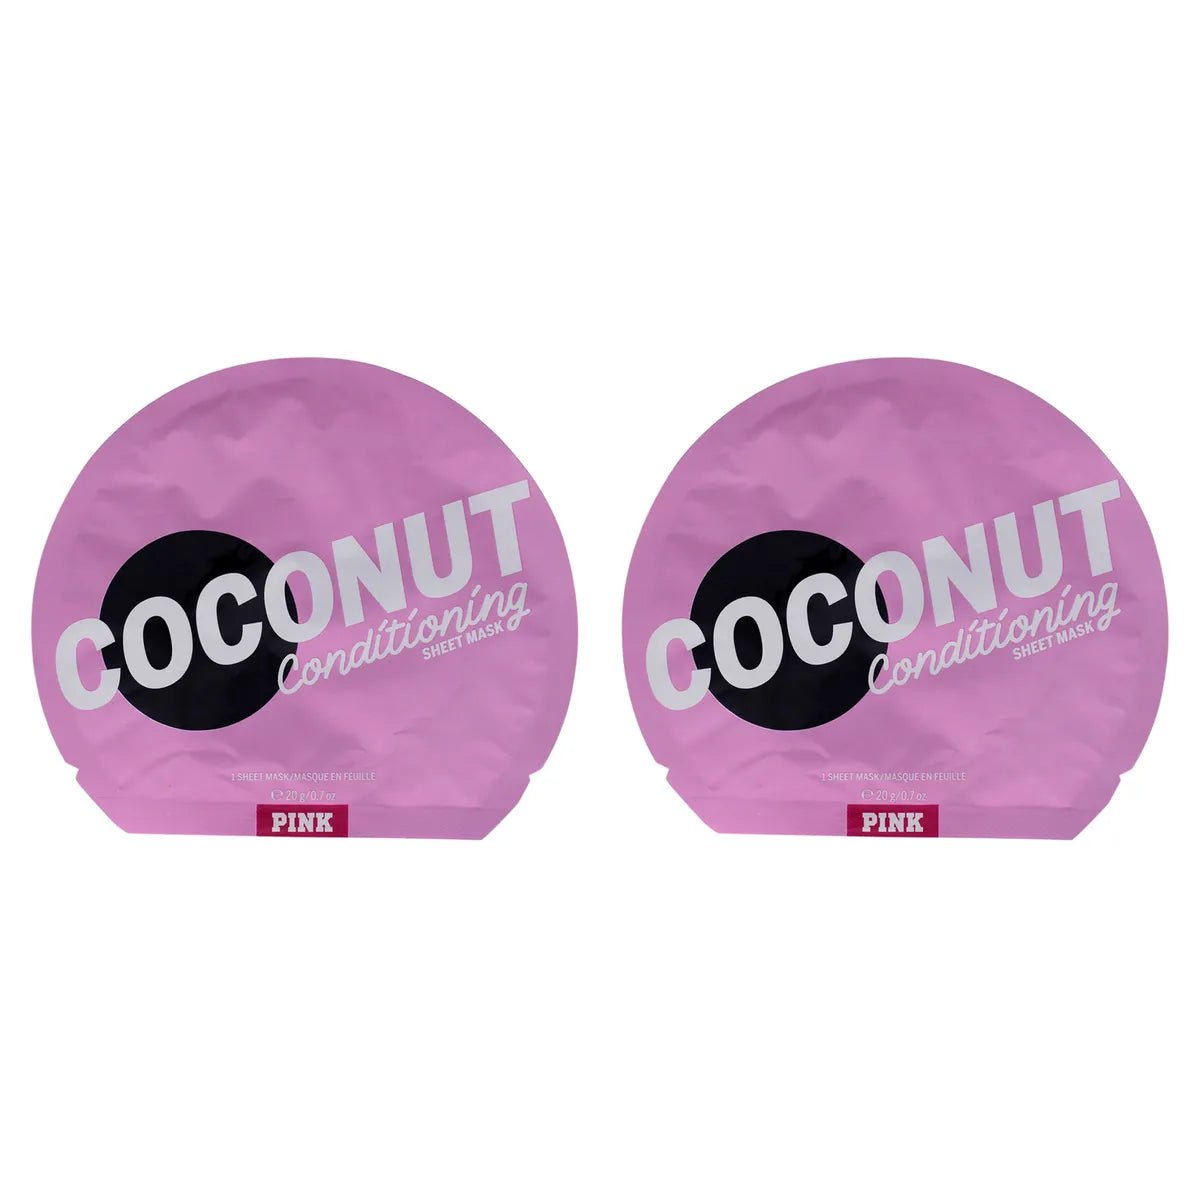 Victoria's Secret Pink Coconut Conditioning Sheet Mask | My Perfume Shop Australia